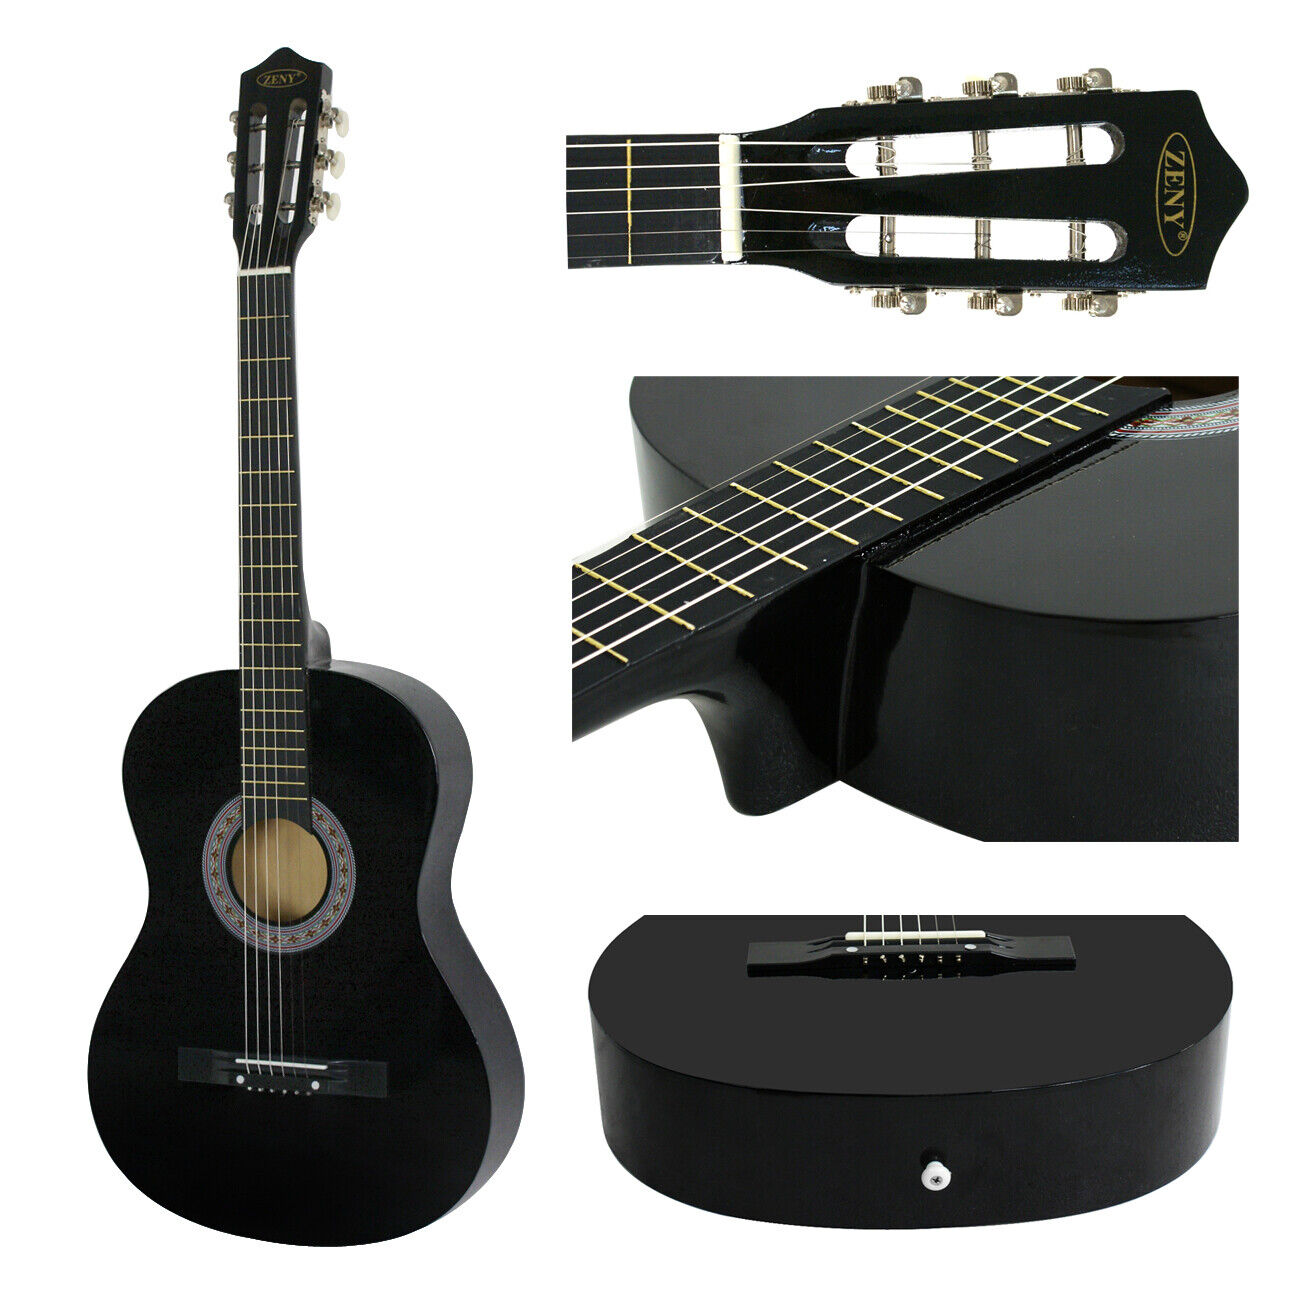 38″ Full Size Acoustic Guitar Adult Kids Beginners Black Guitar with Guitar Pick 3